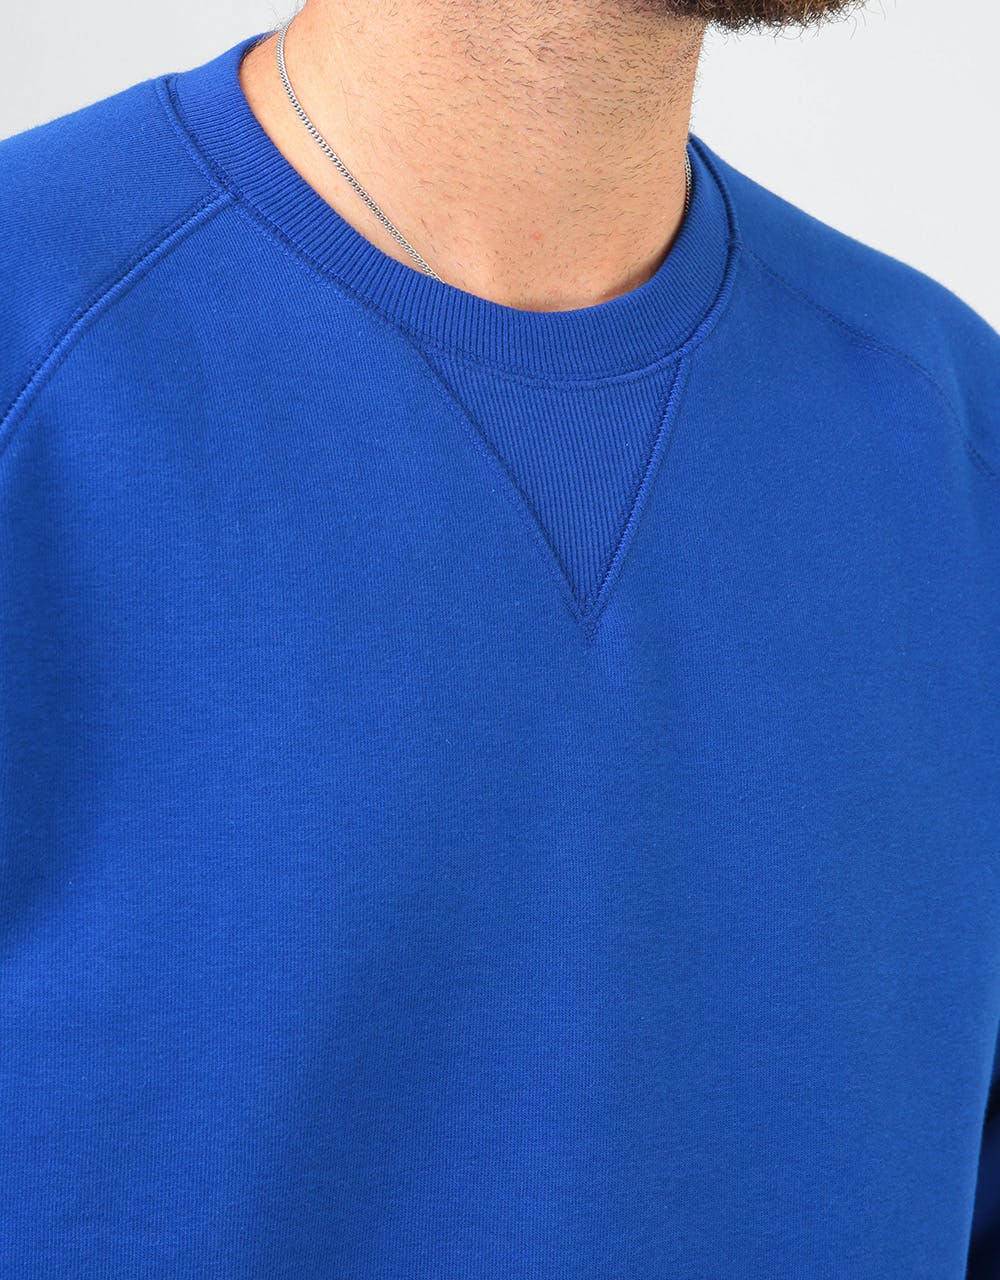 Carhartt WIP Chase Sweatshirt - Thunder Blue/Gold